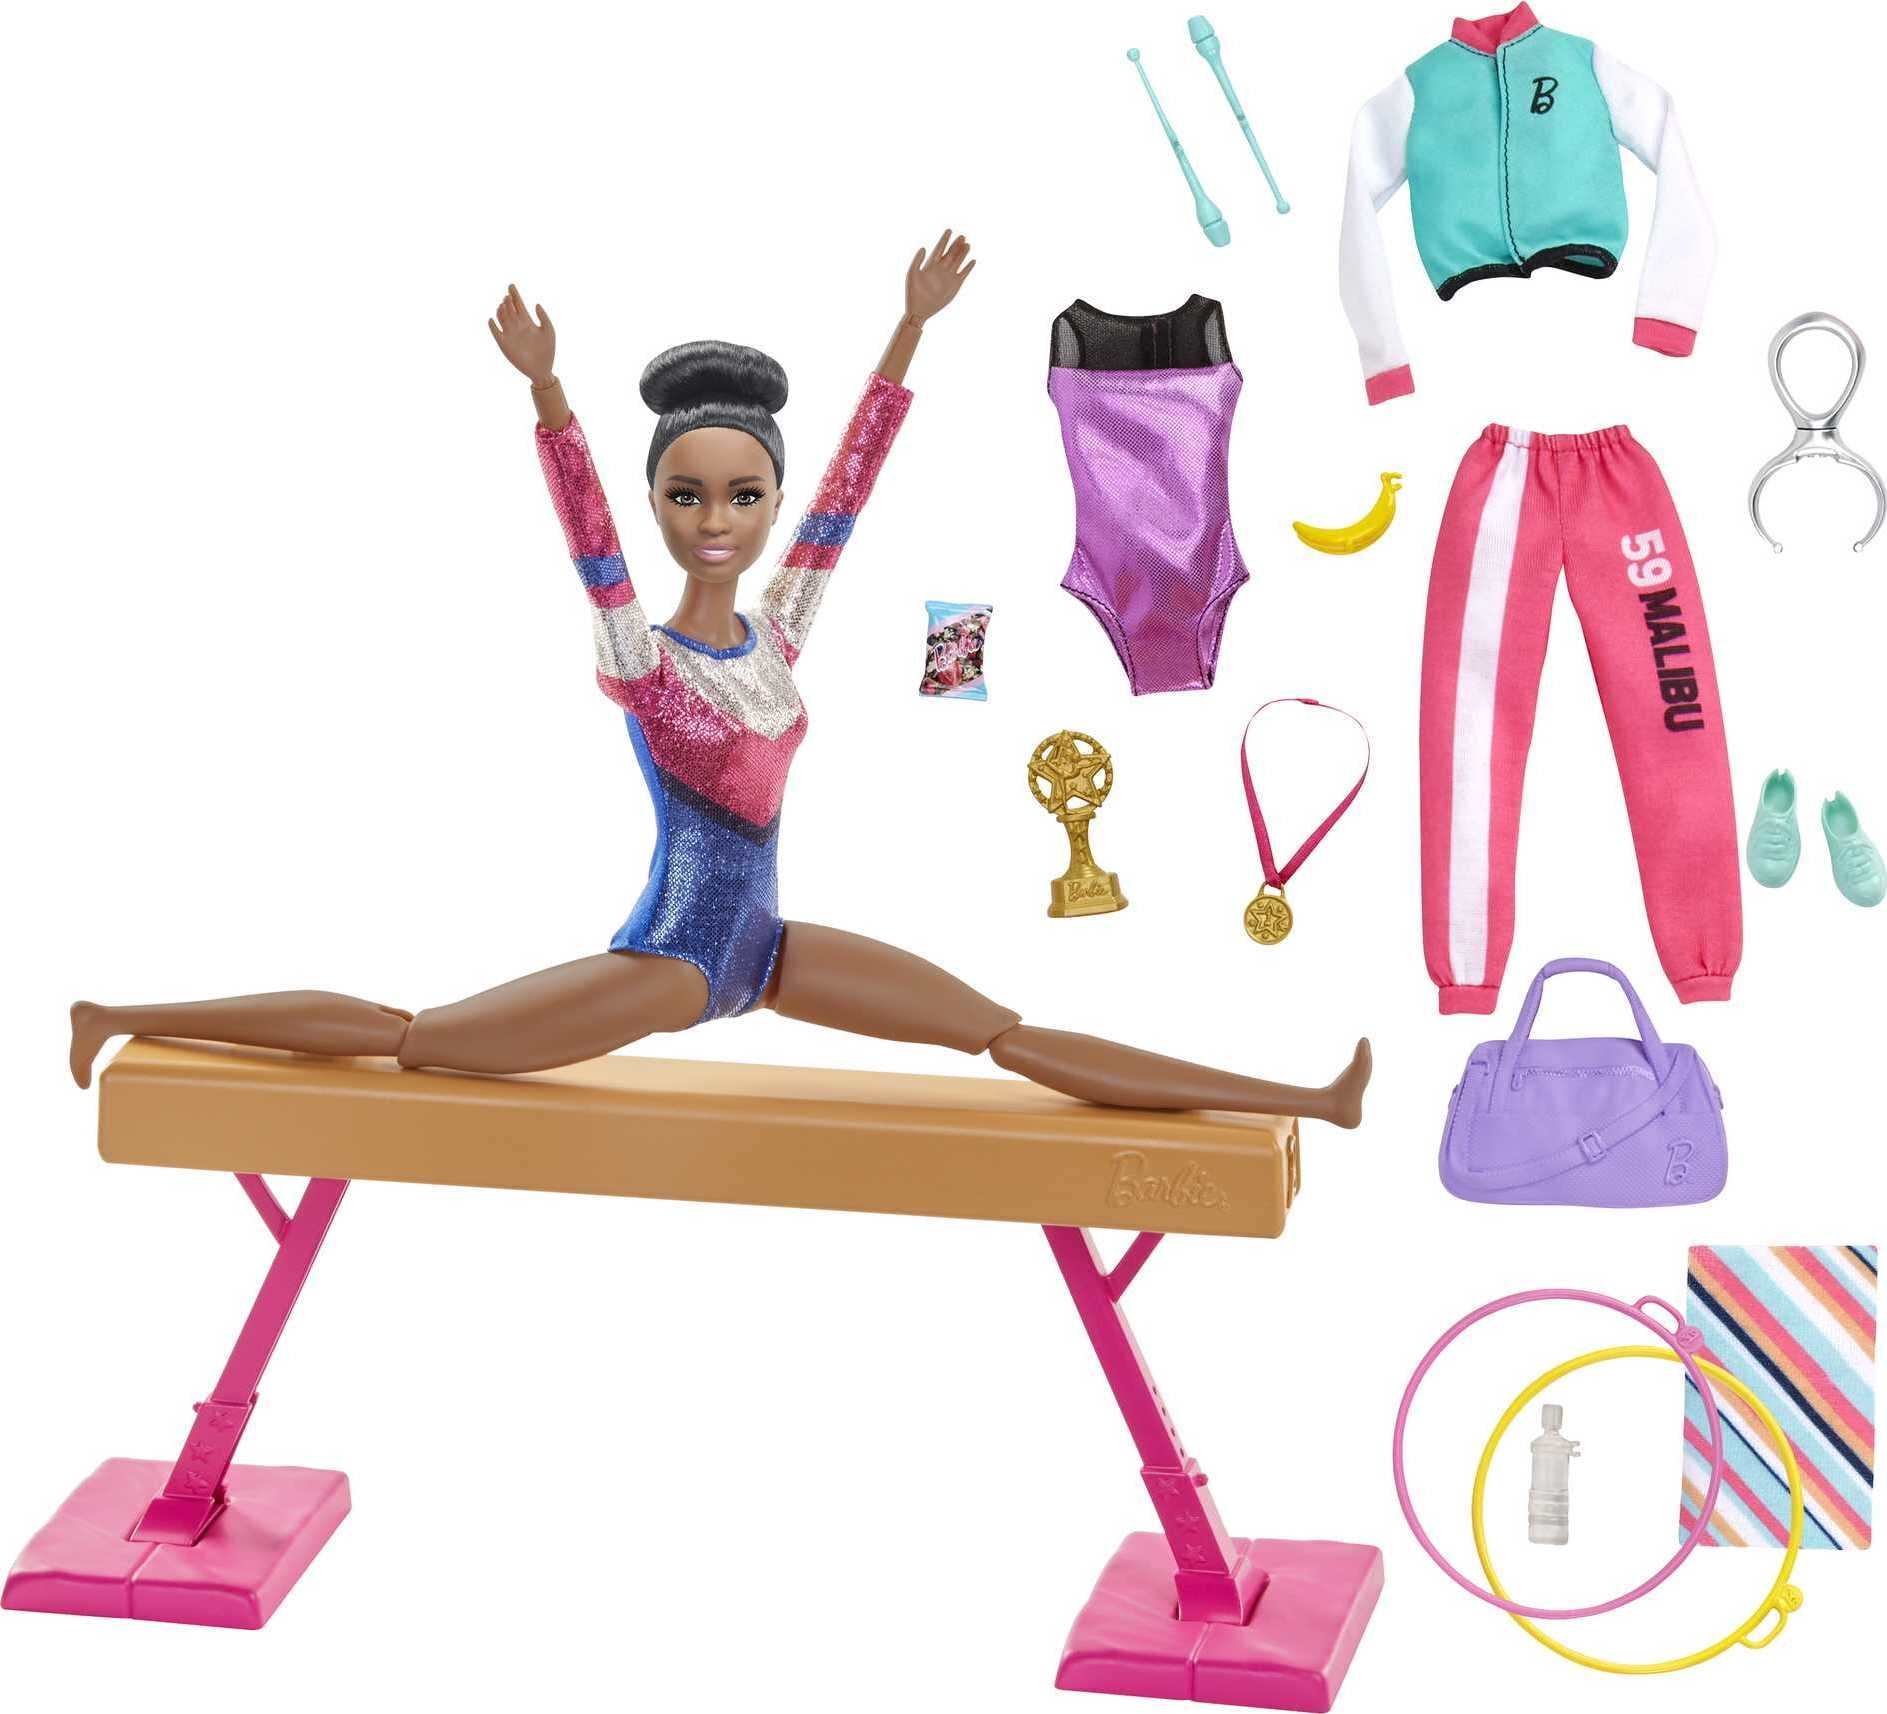 Barbie Gymnastics Playset with Brunette Doll & 15+ Accessories, Twirling Gymnast Toy & Balance Beam